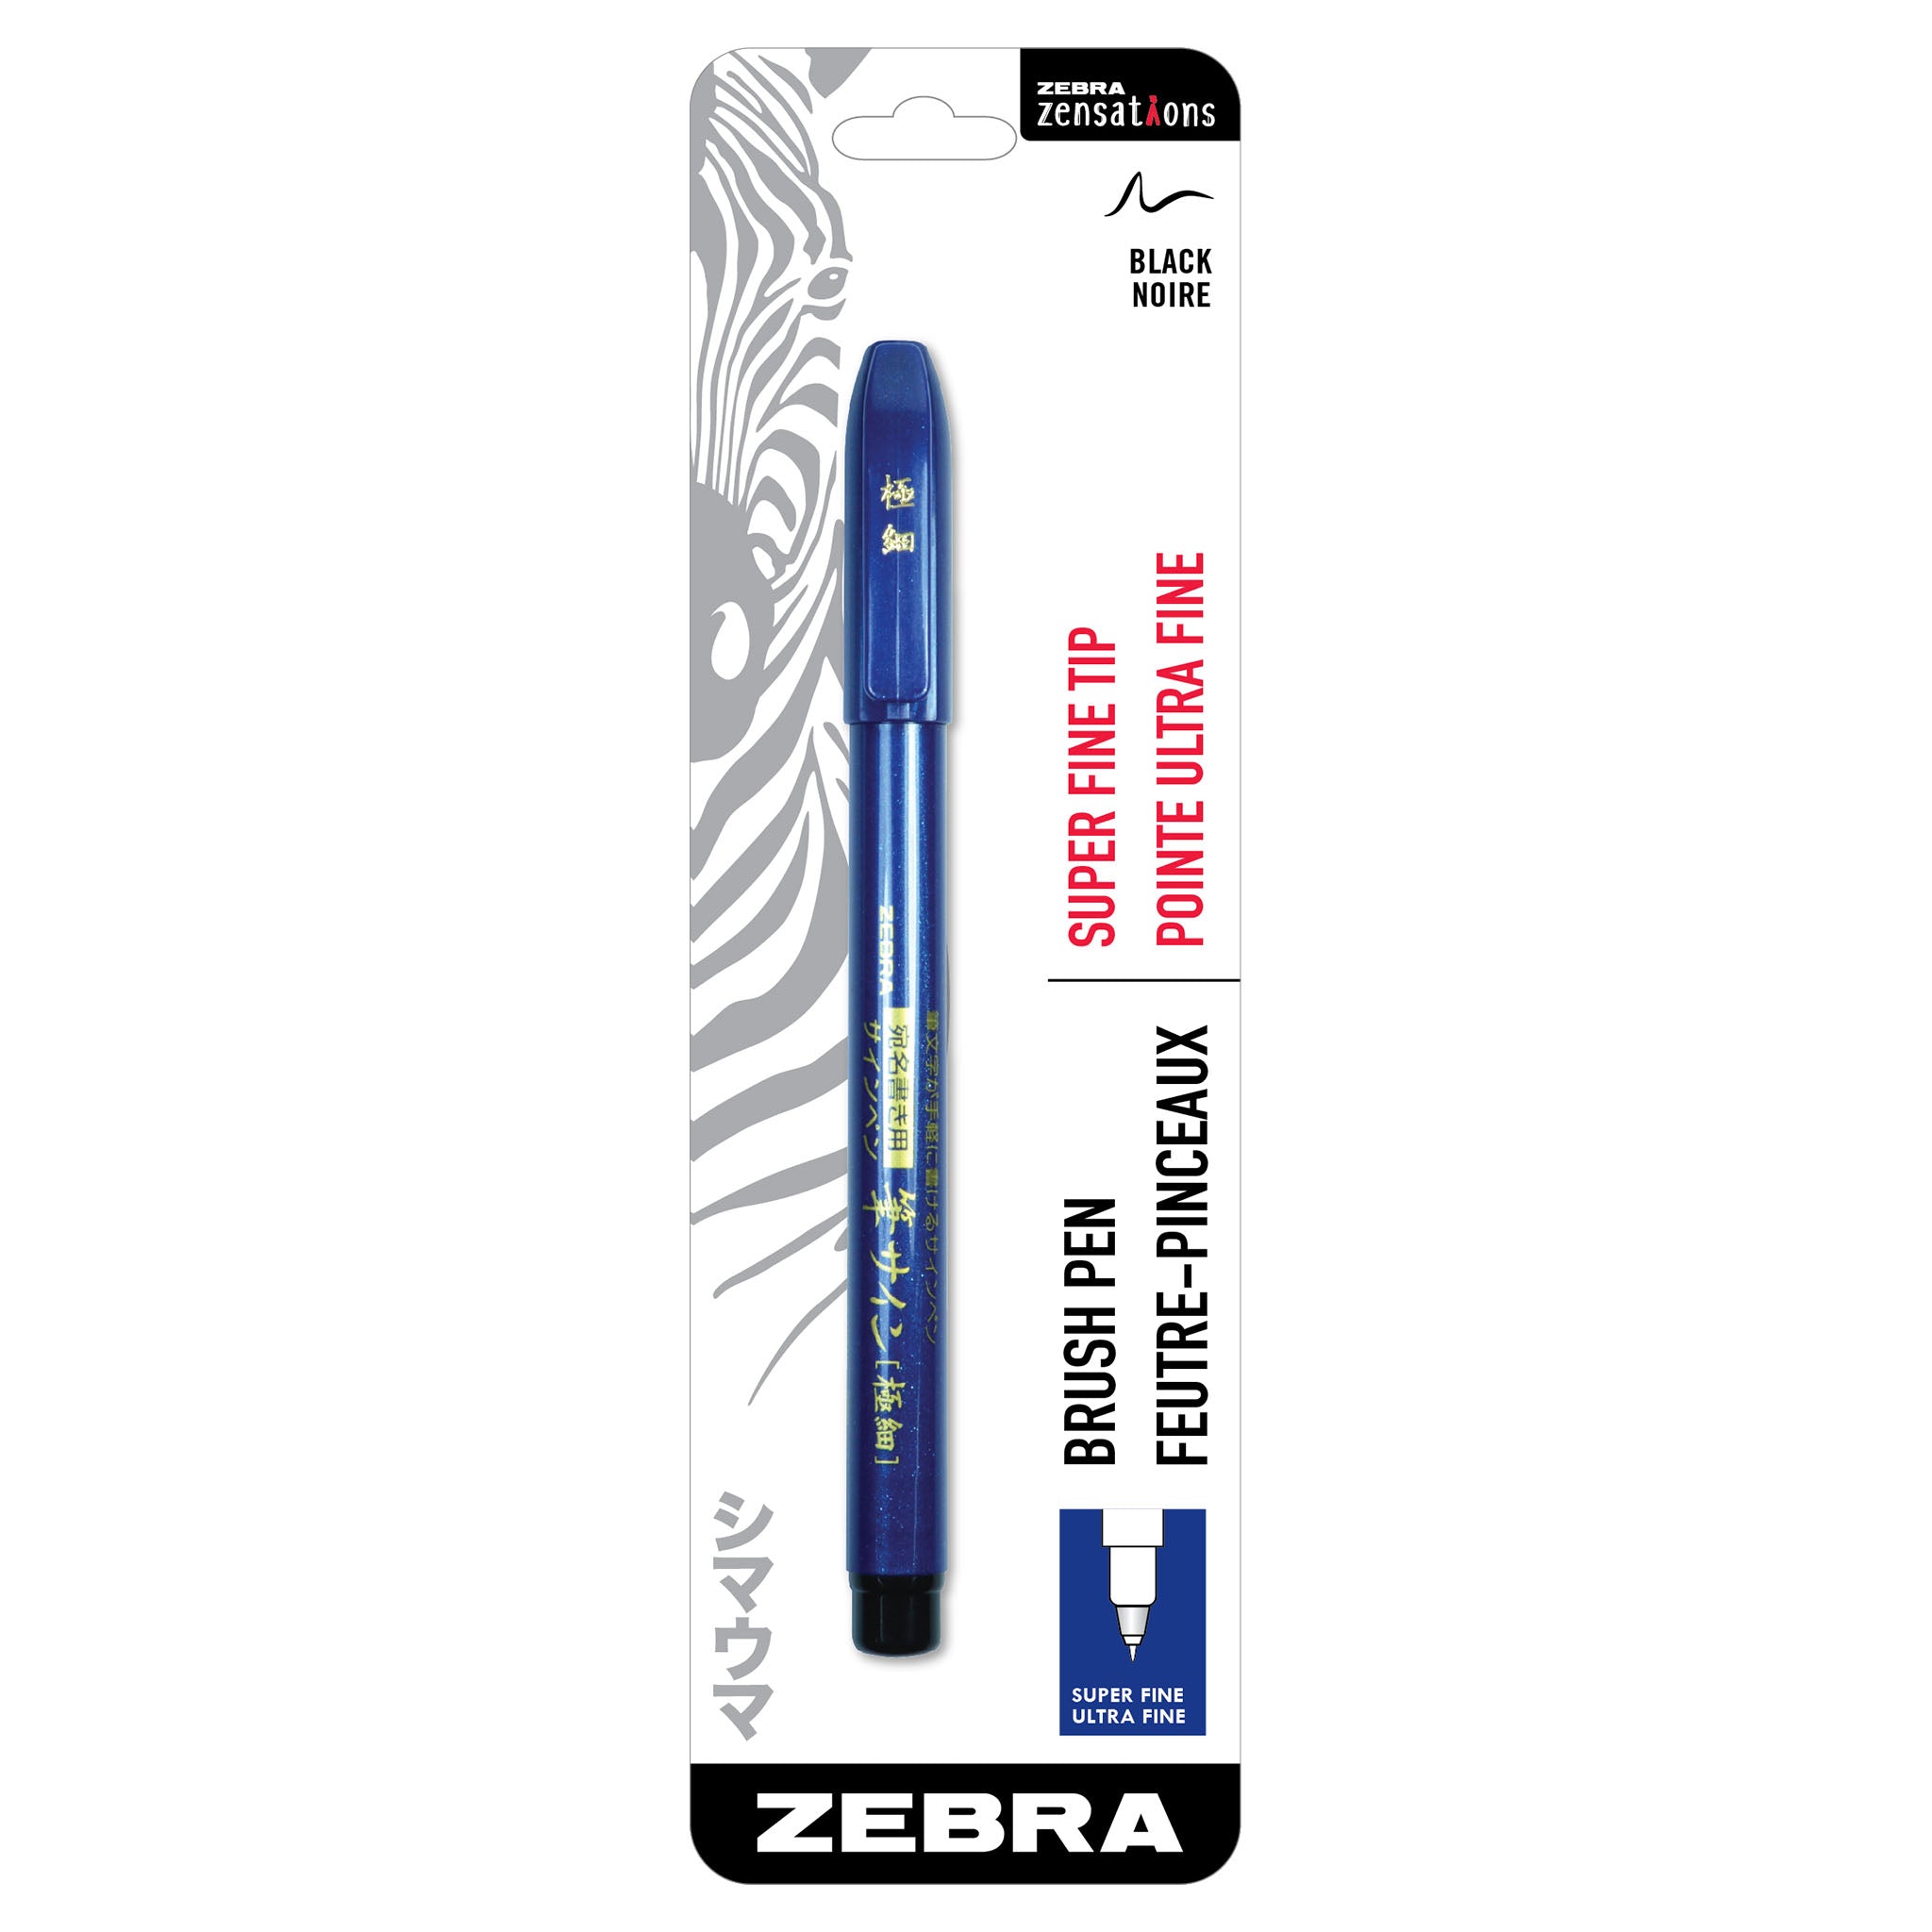 ACEPORTE zebra fude sign brush pen usu-zumi (p-wf1-gr), calligraphy pen for  art drawings